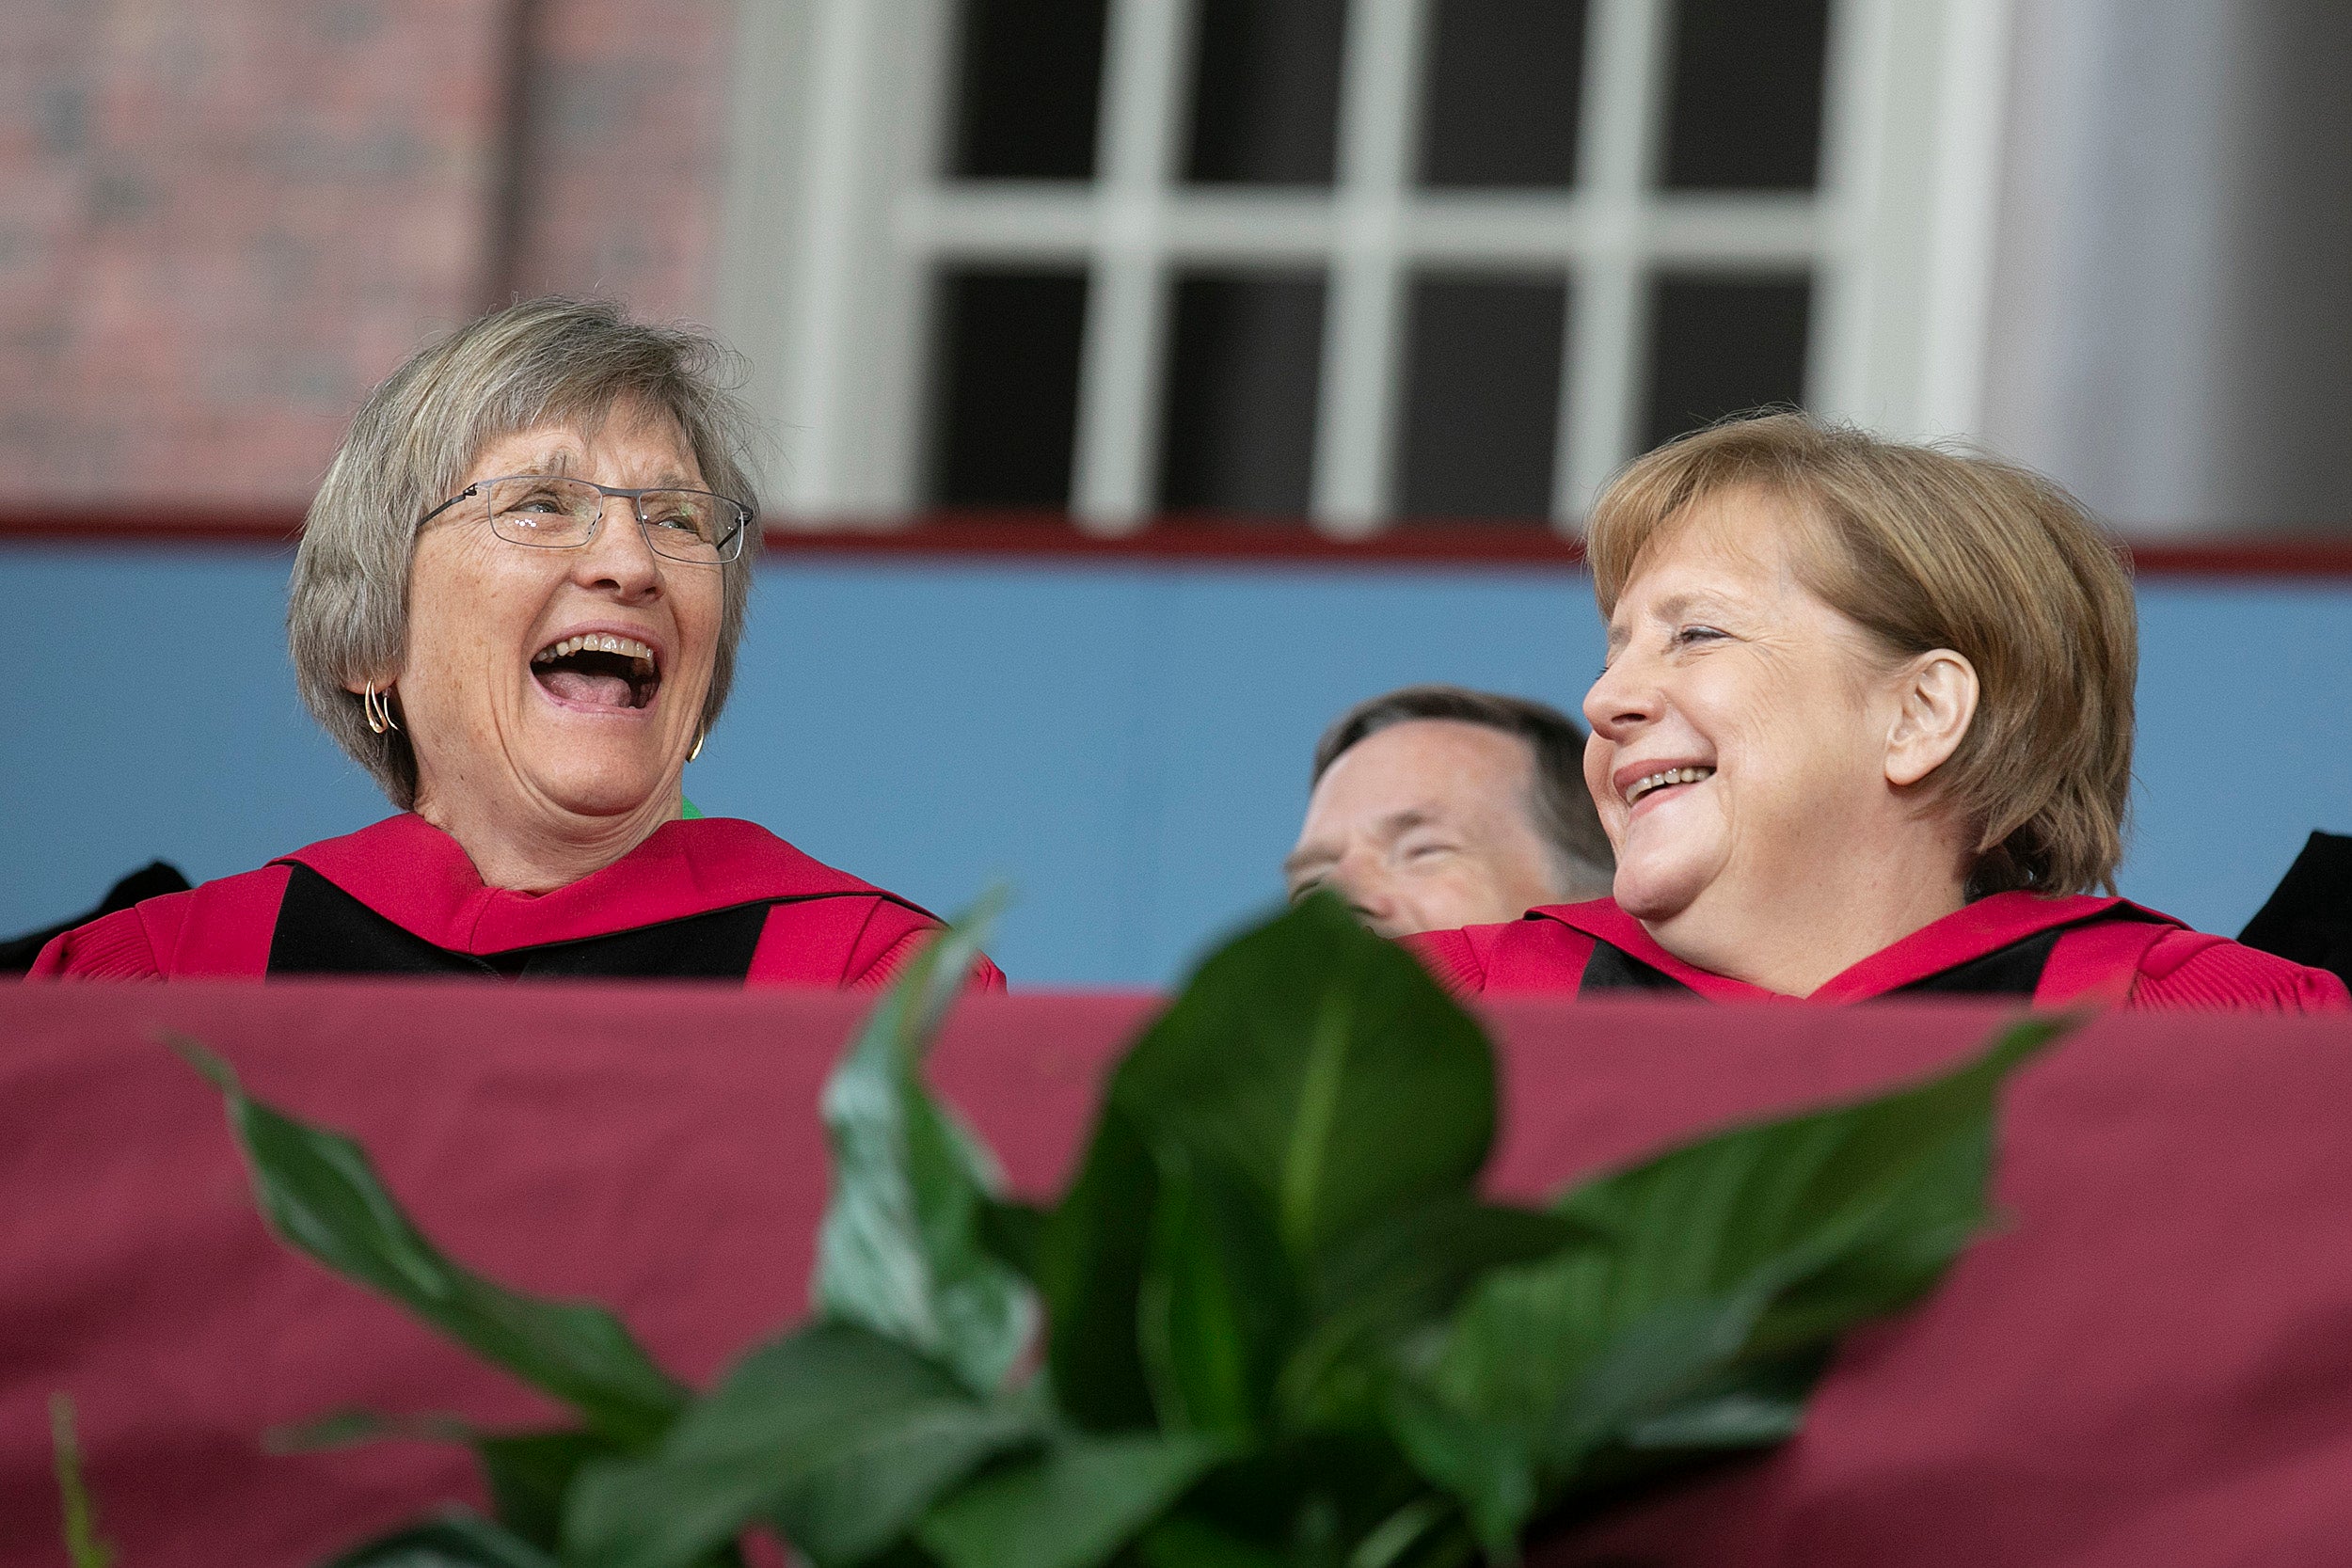 Drew Faust laughs with Angela Merkel